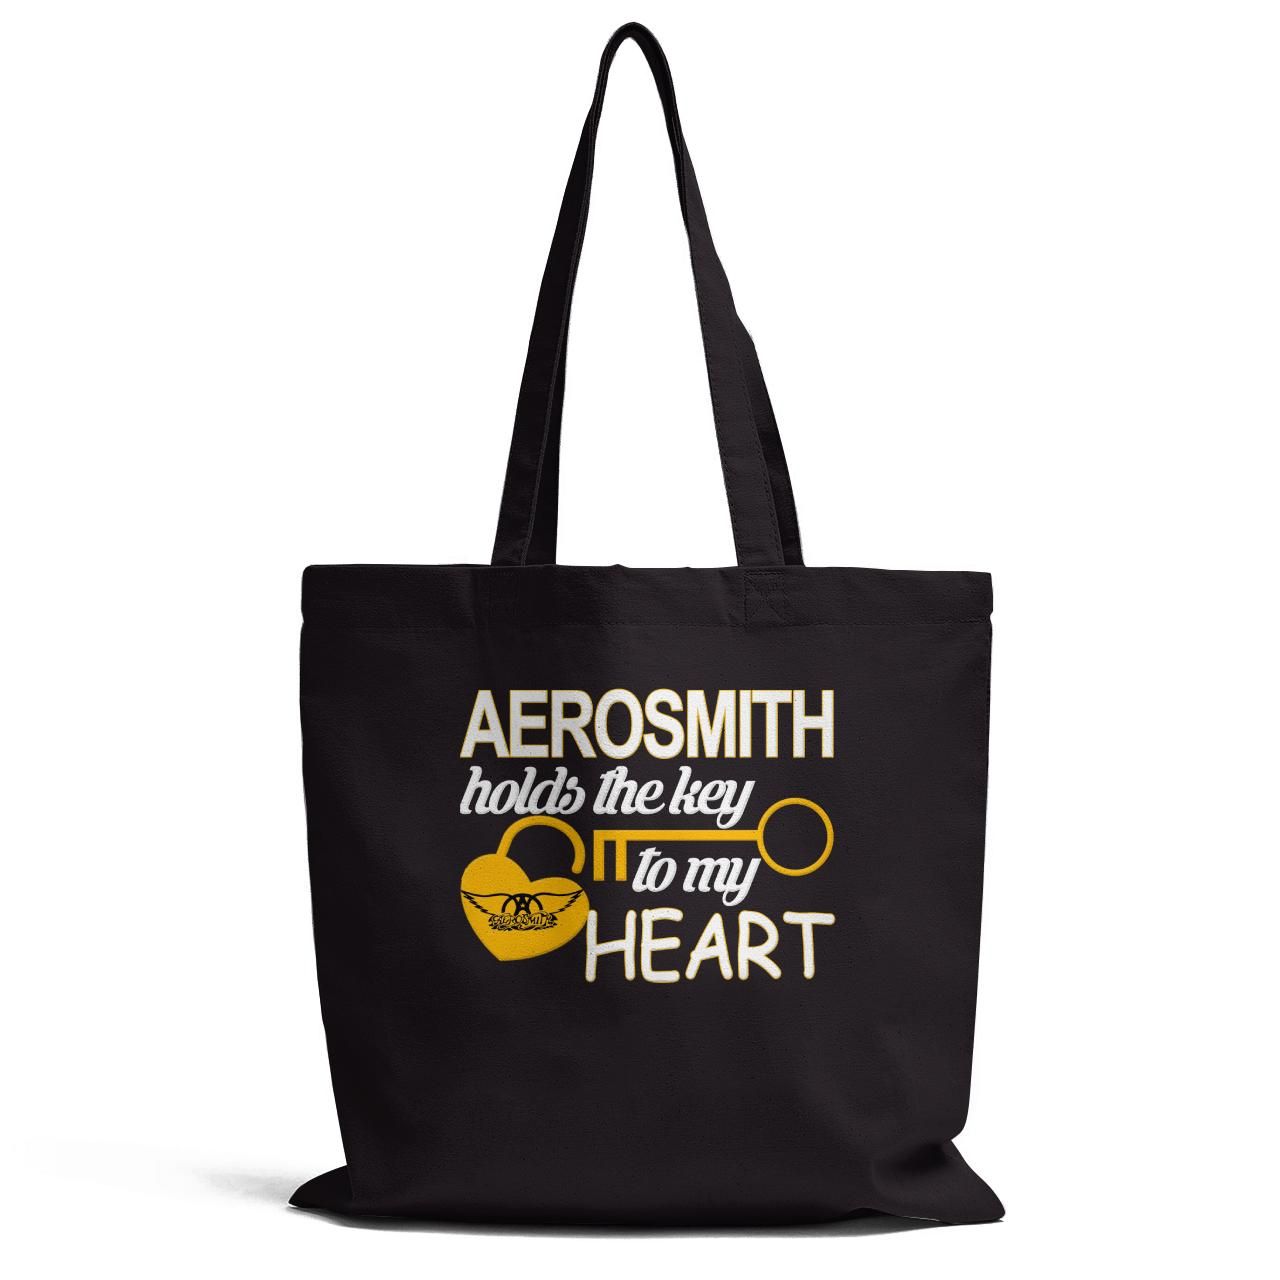 Aerosmith Holds The Key To My Heart Tote Bag